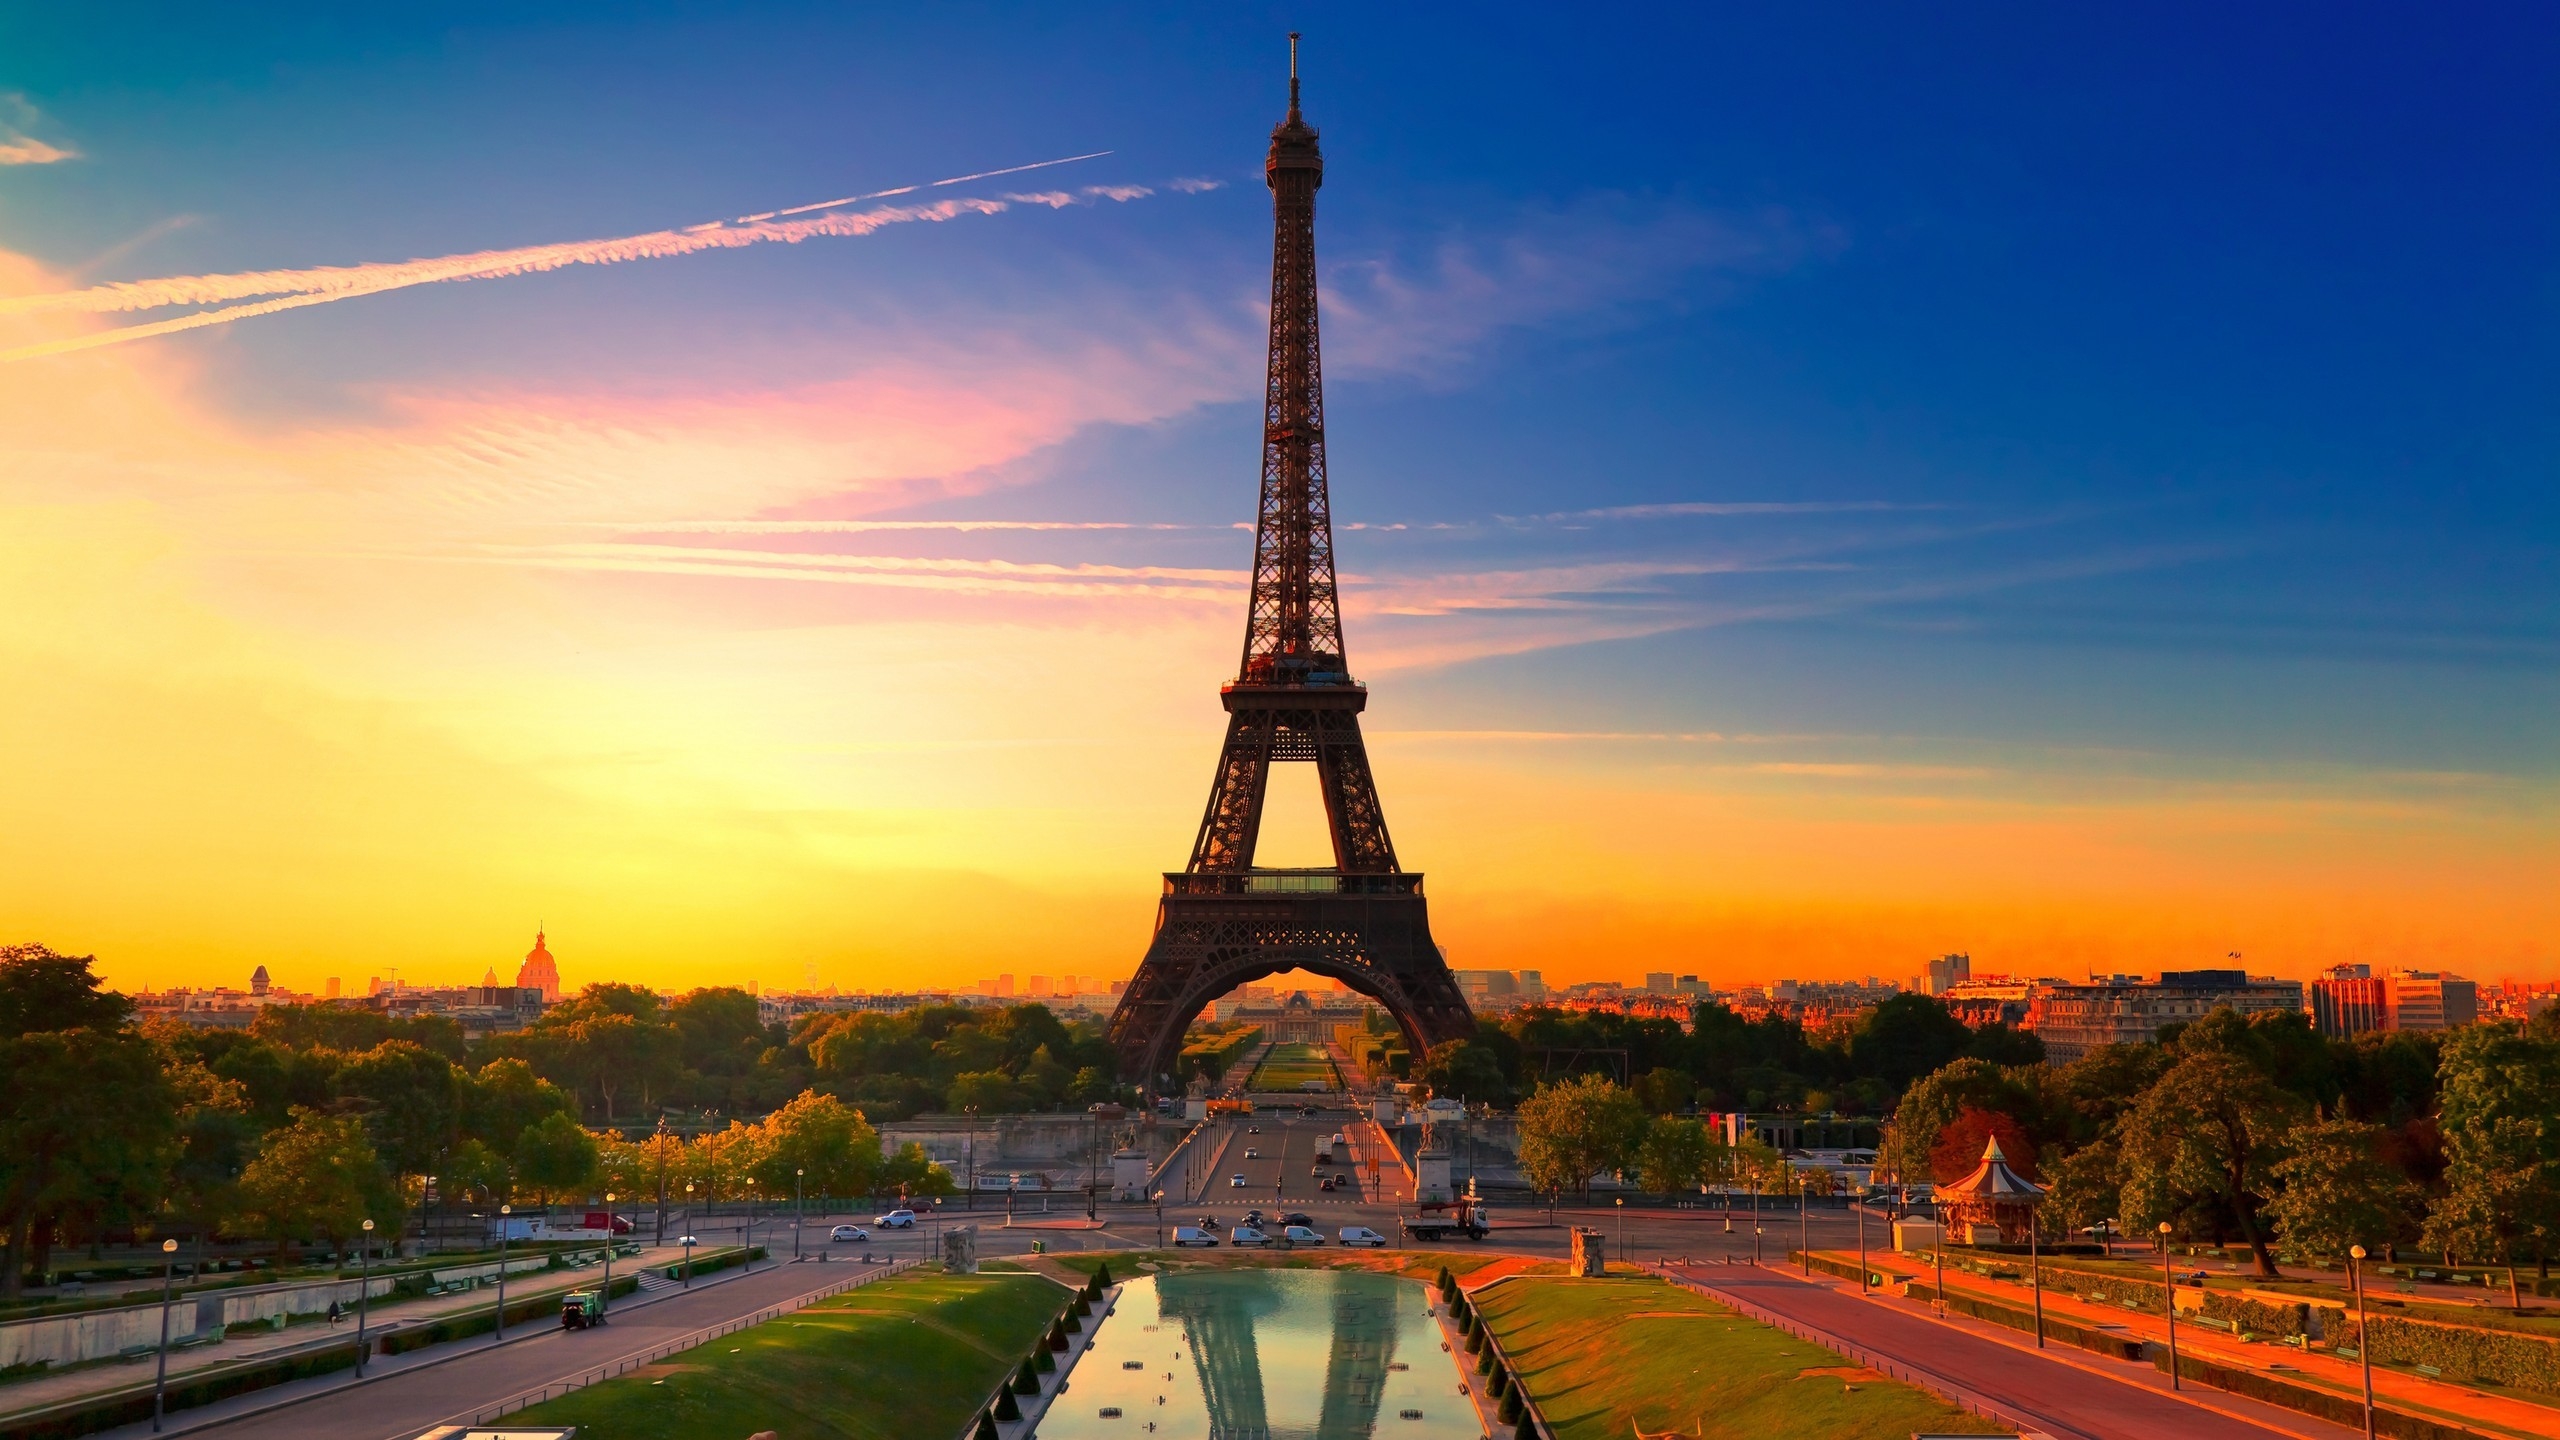 Sunset in Paris for 2560x1440 HDTV resolution